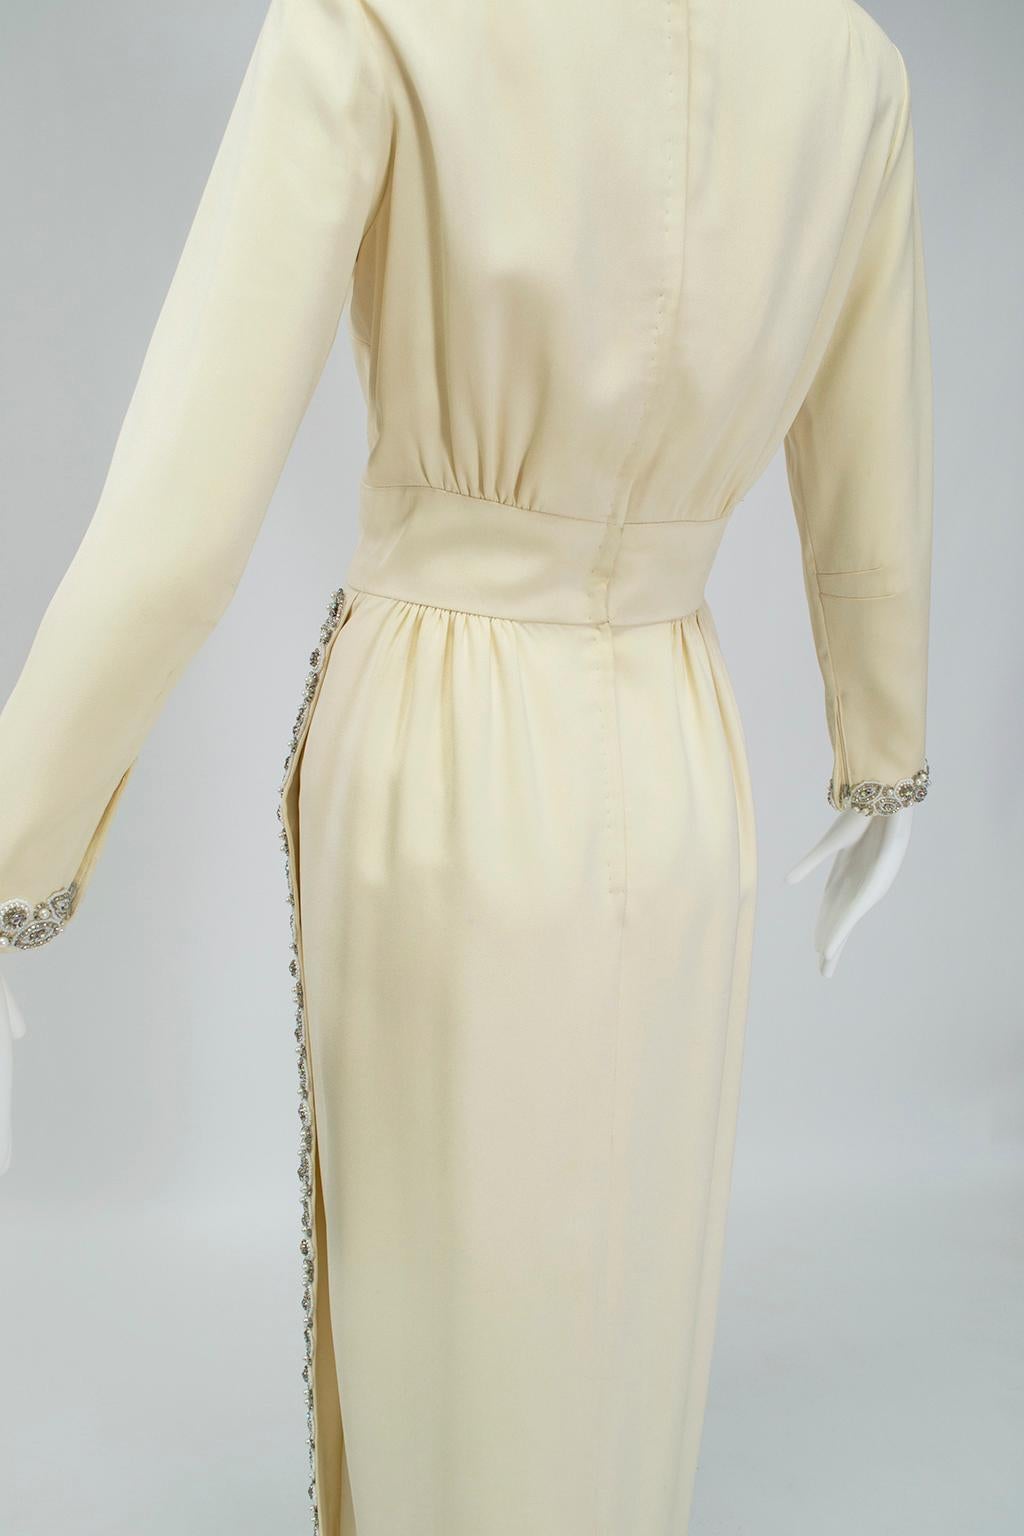 Byzantine Cream Jeweled Silk Modesty-Dressing Panel Skirt Wedding Gown – M, 1968 For Sale 1